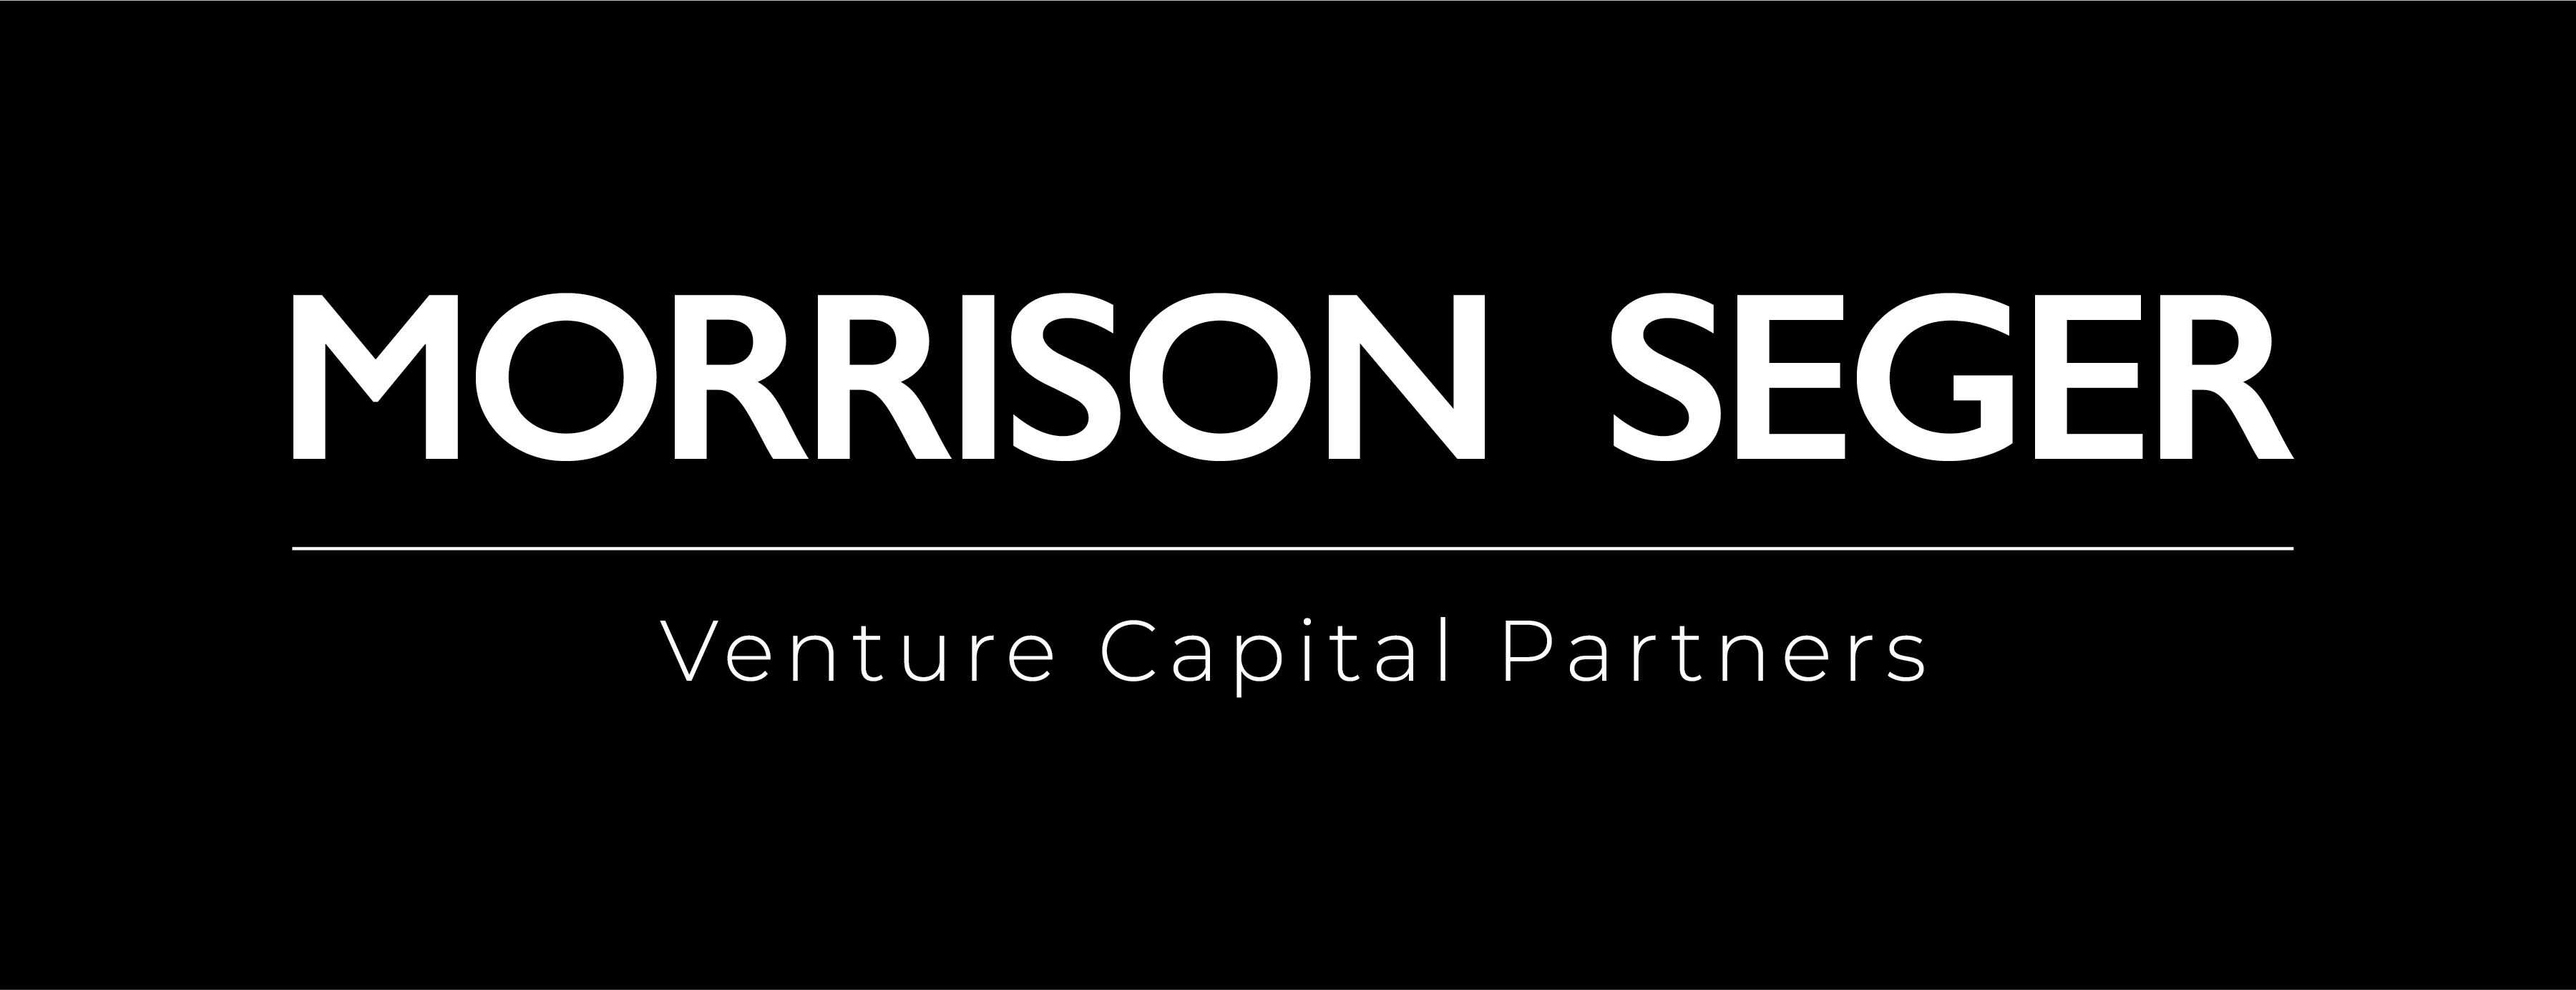 Morrison Seger Venture Capital Company